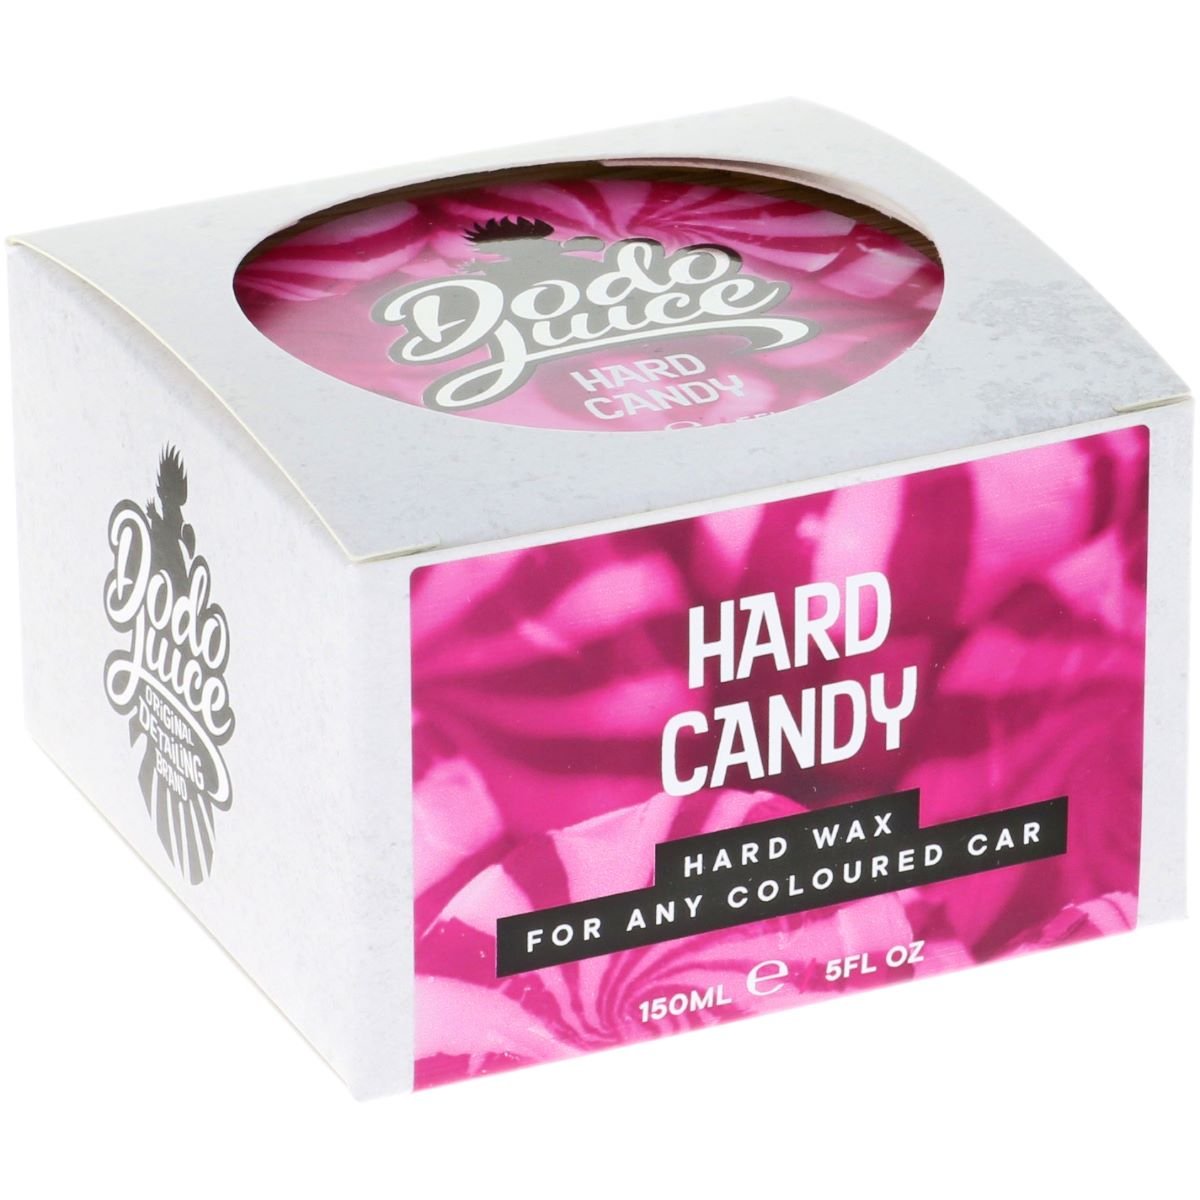 Hard Candy hard wax for any coloured car - 150ml